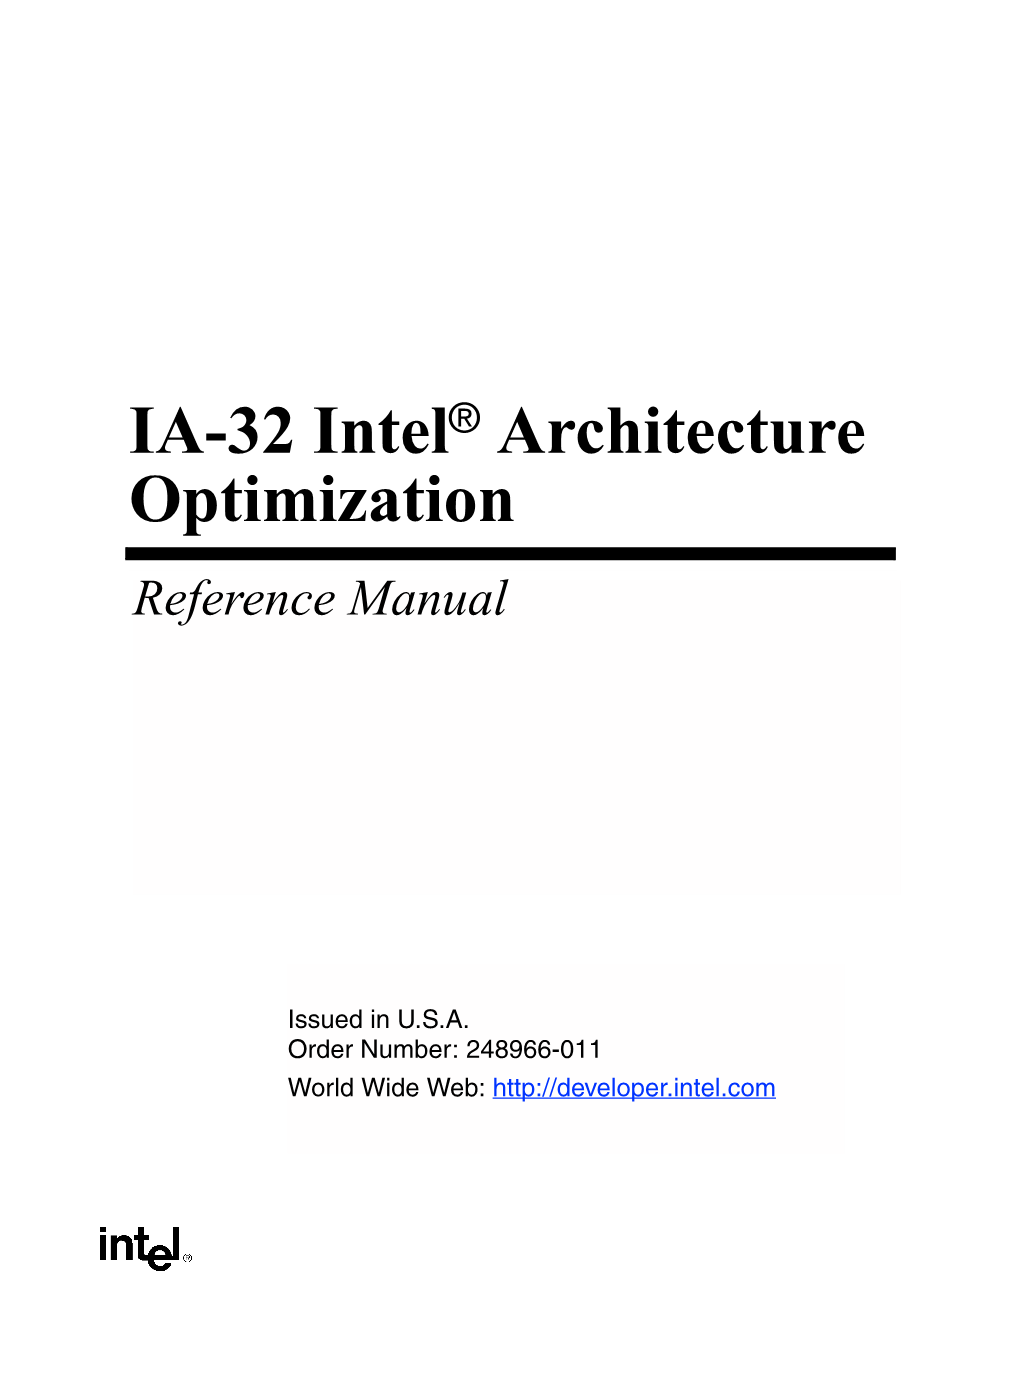 IA-32 Intel® Architecture Optimization Reference Manual